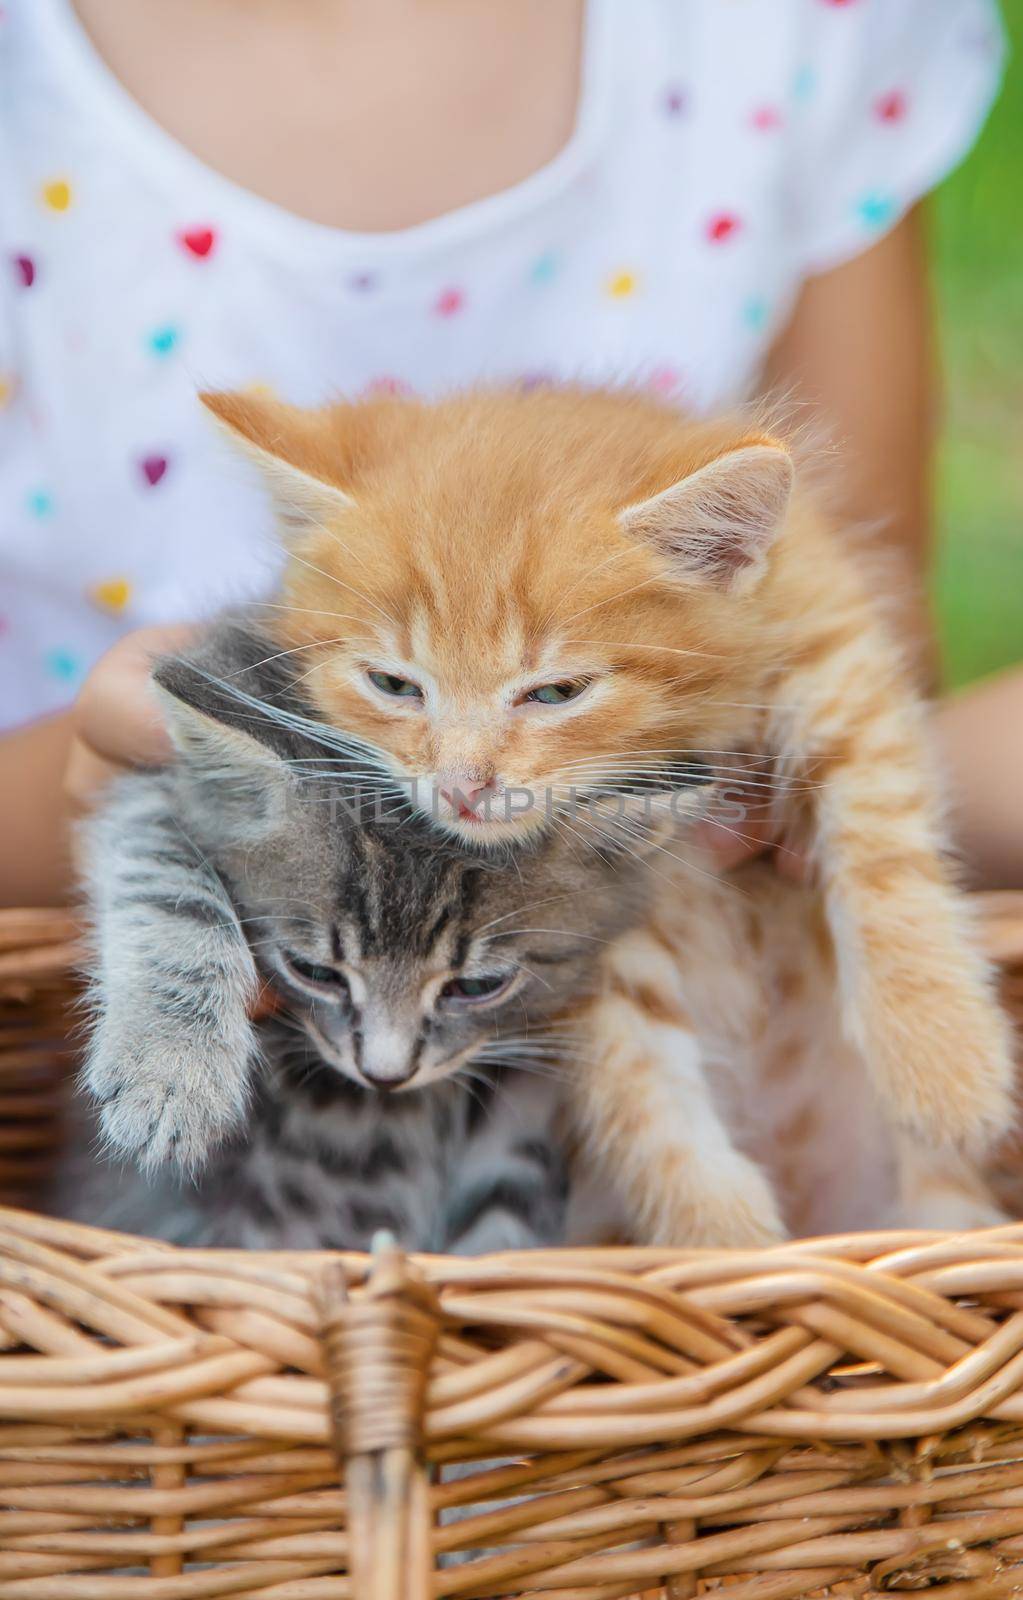 Little kittens in the hands of children. Selective focus. Animals.